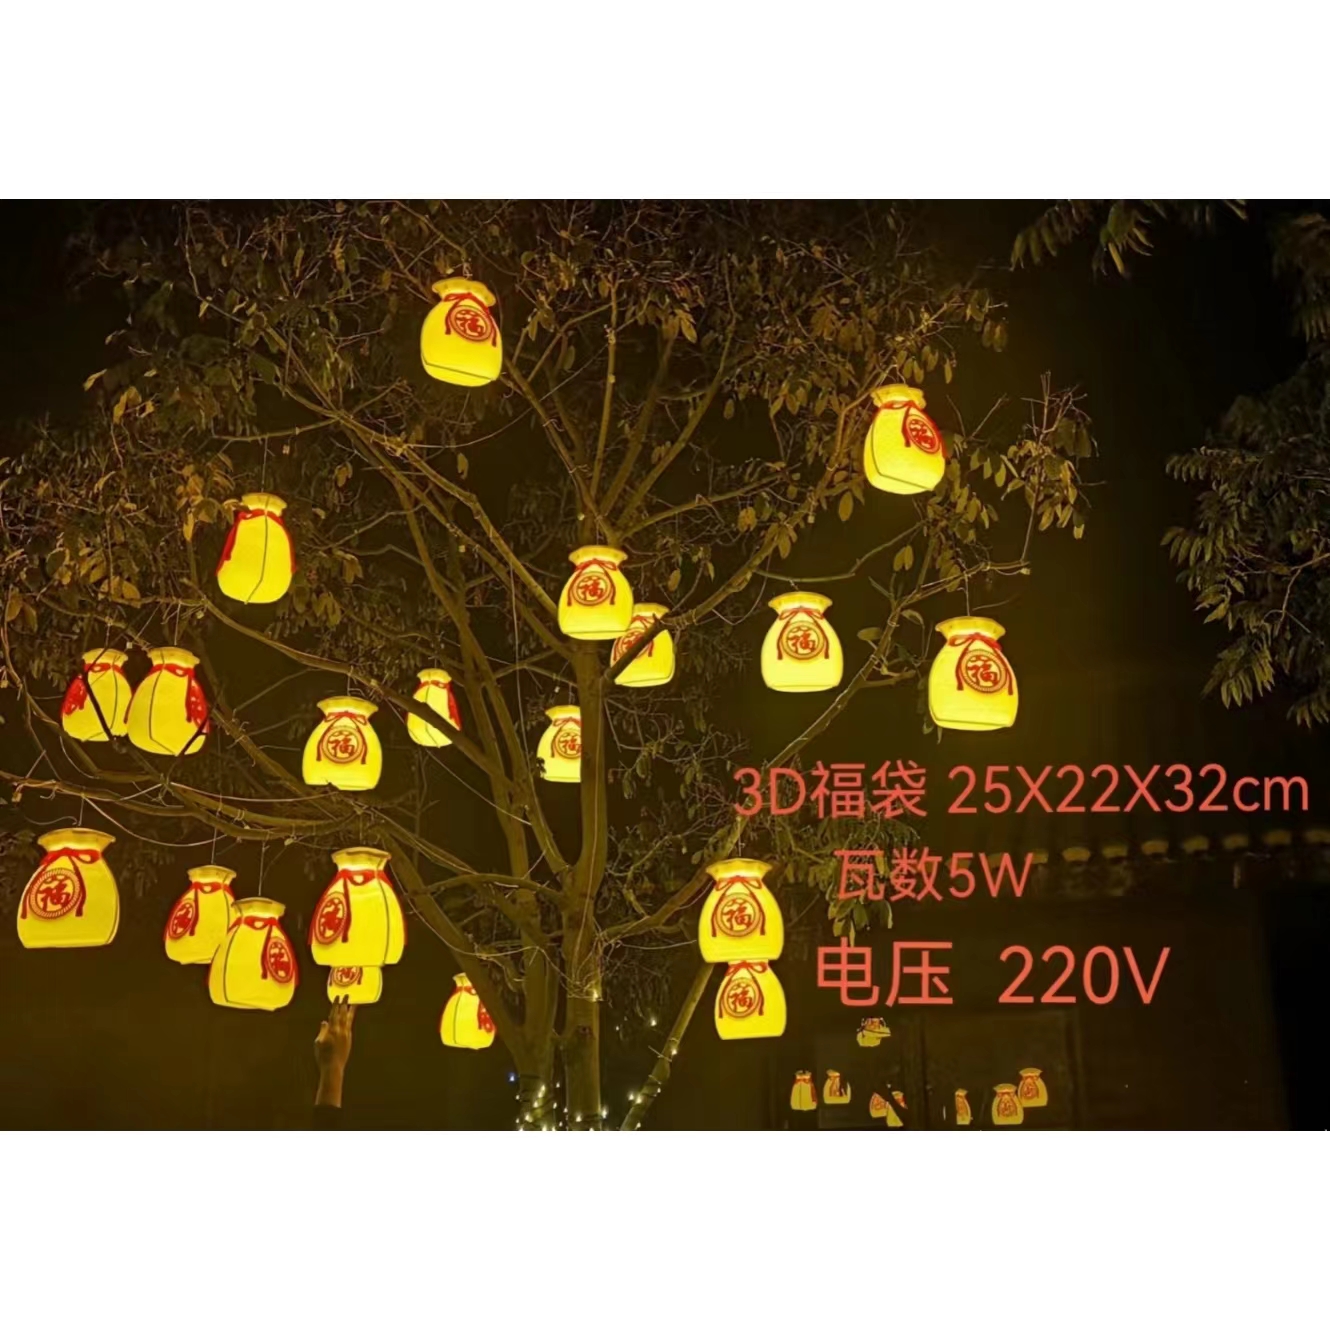 Three-dimensional lucky bag Spring Festival decoration festival lights